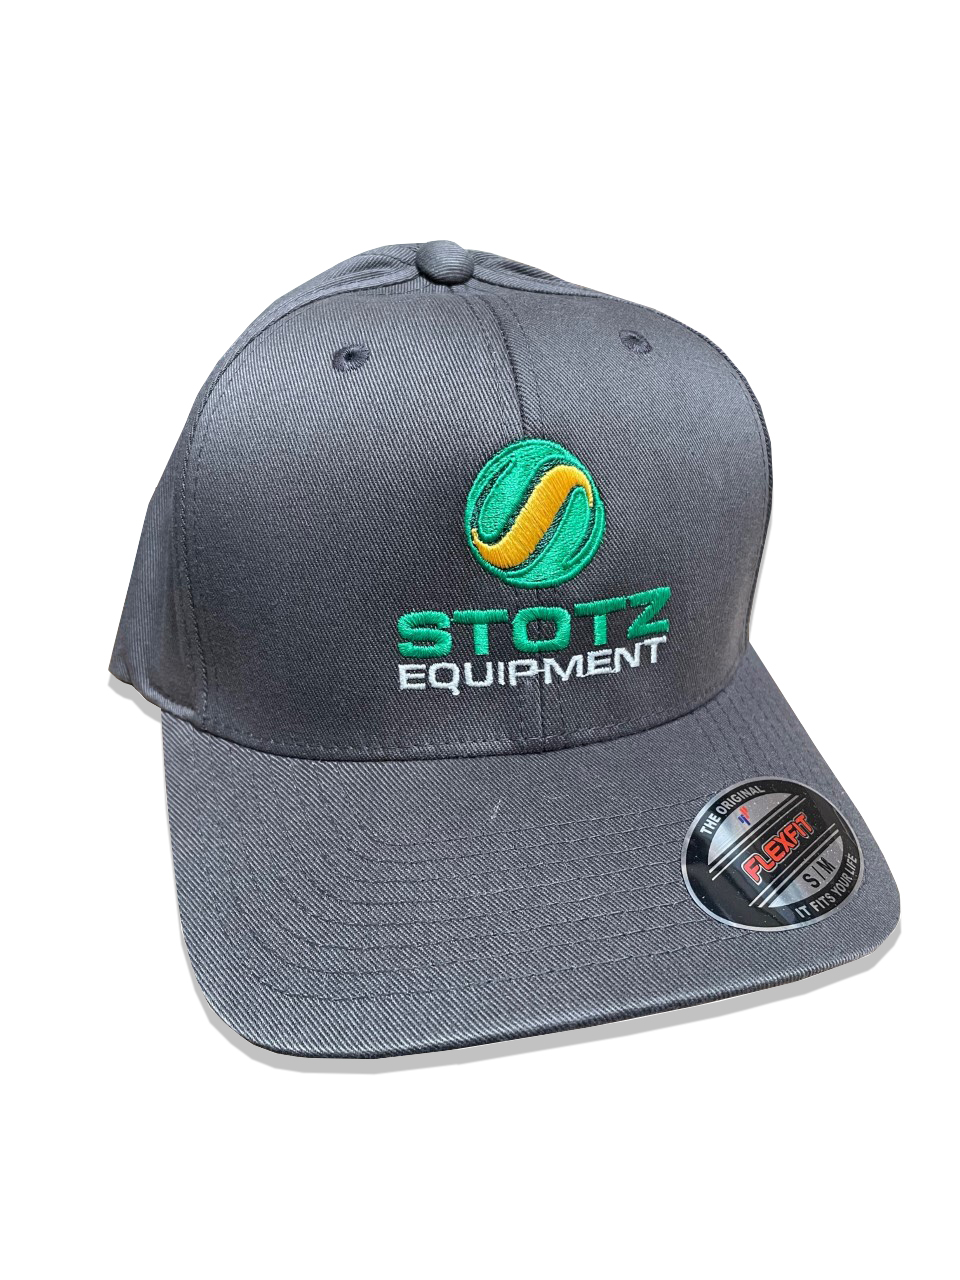 AG Grey Flexfit Hat Equipment | Marketing Center – Stotz